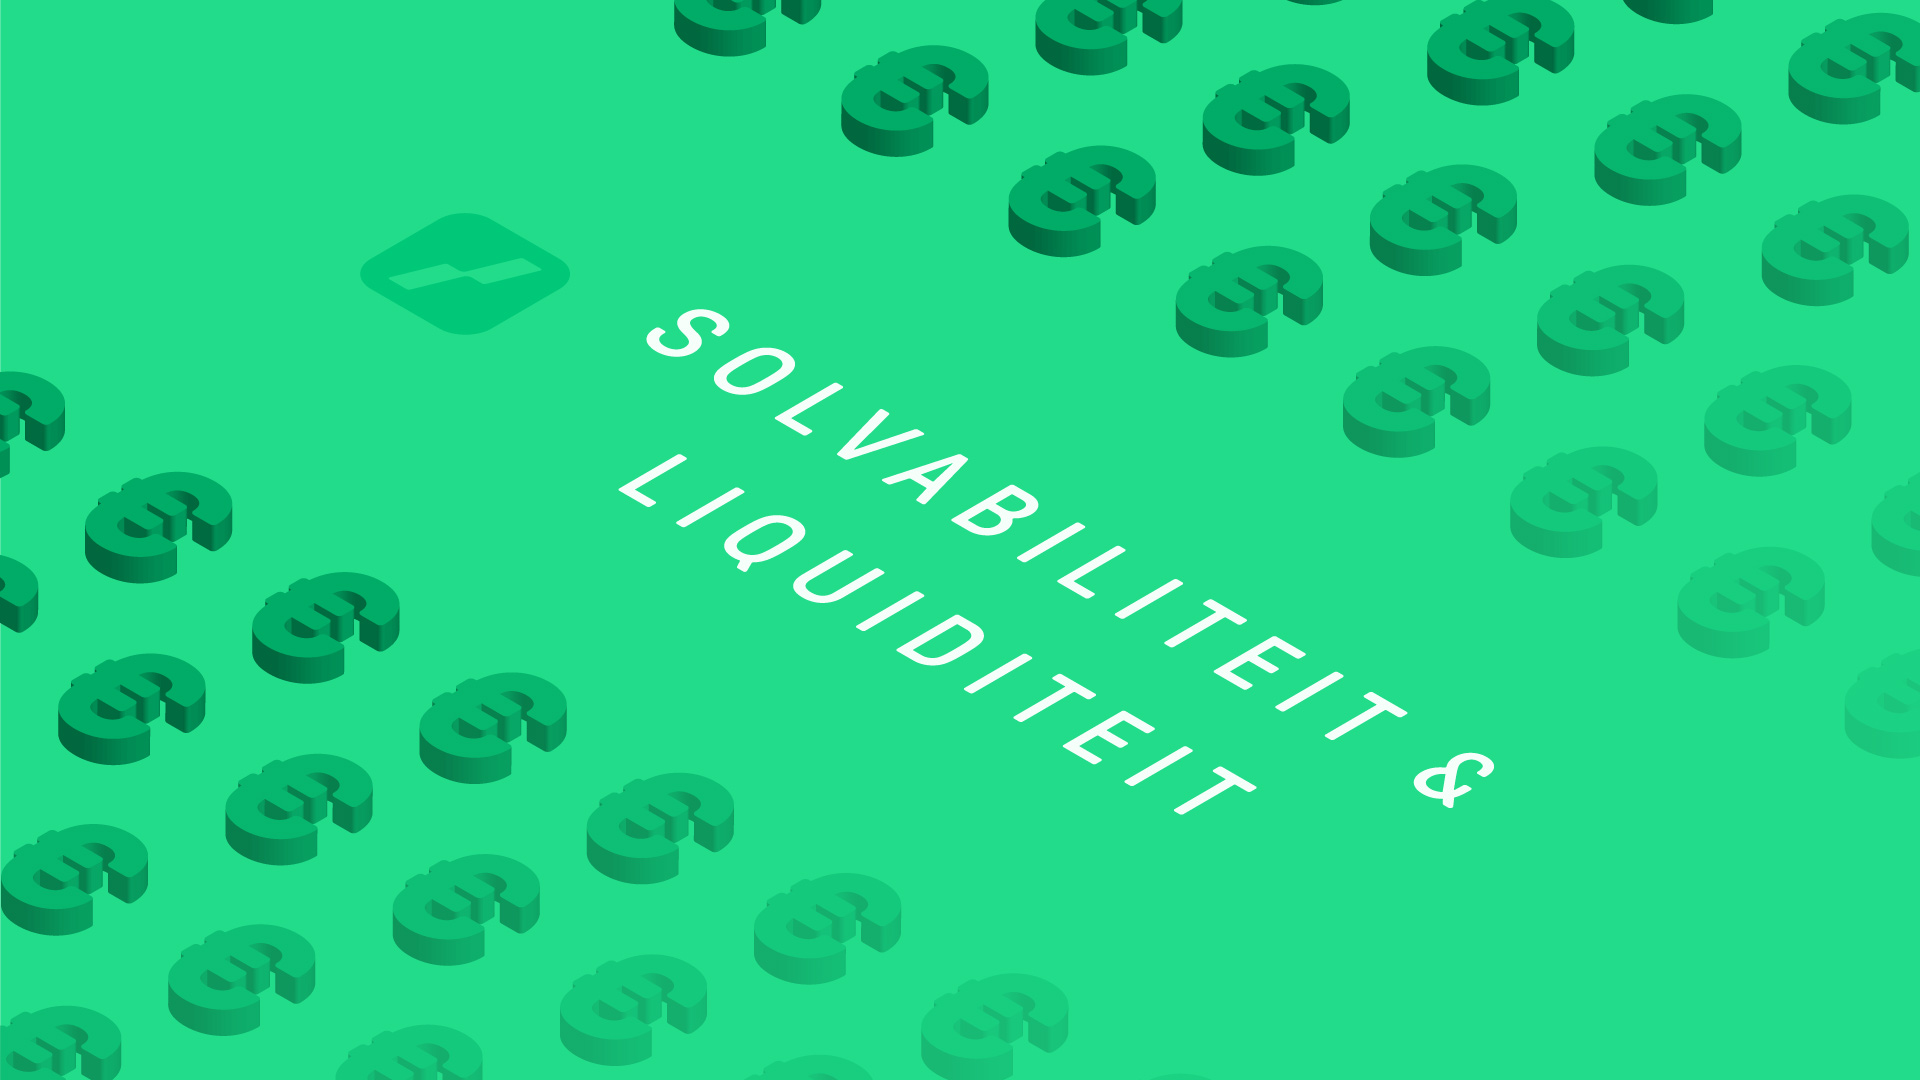 Solvabiliteit betekenis - Solvabiliteit berekenen - Liquiditeit betekenis - Liquiditeit berekenen